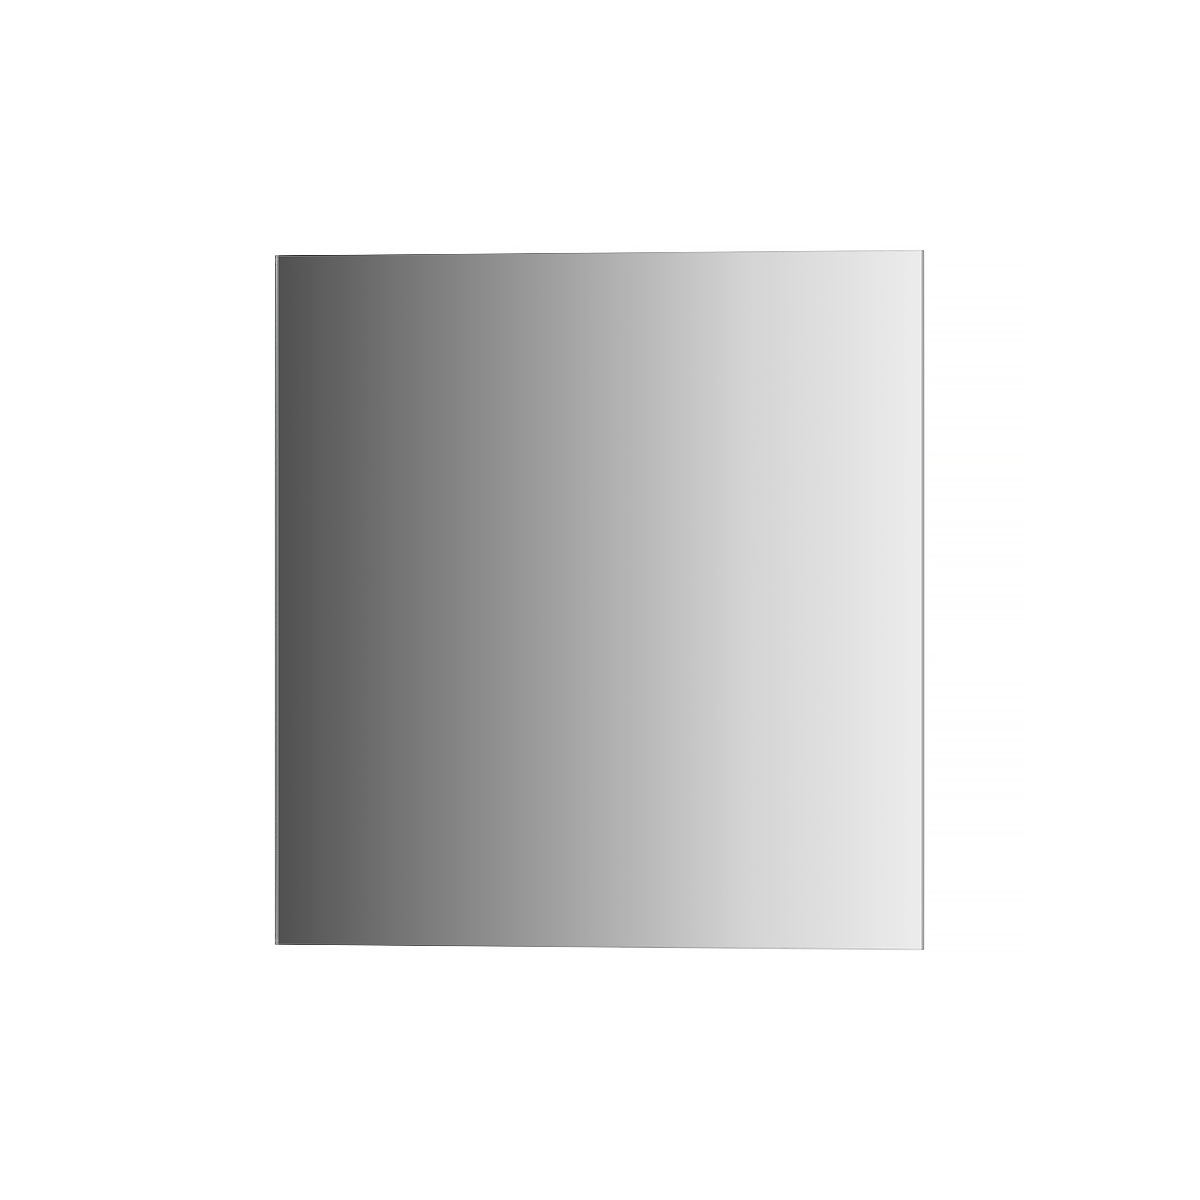 Зеркальная плитка со шлифованной кромкой  Evoform BY 1407 25x25см зеркальная плитка mirox 3g sensea nnlm21 квадратная 30x30 см глянцевая серебро 4 шт